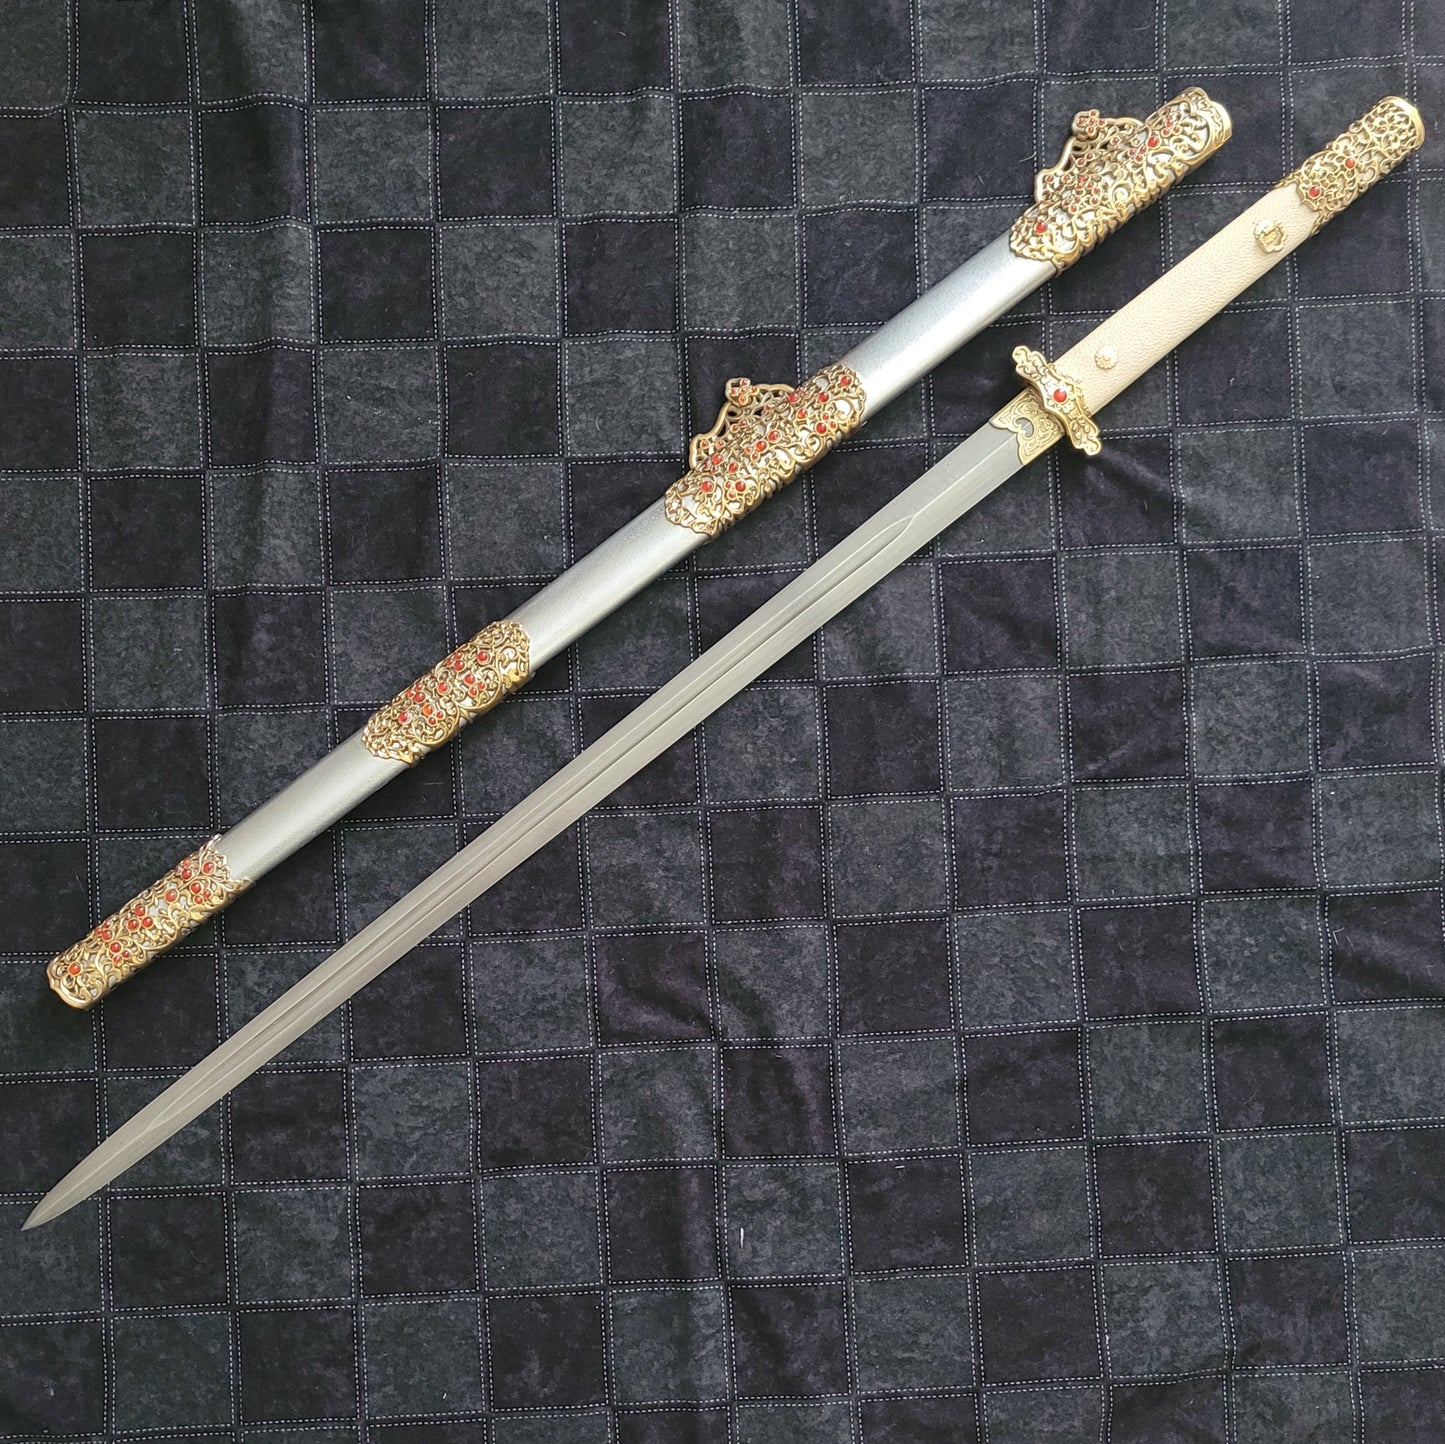 Jian Practical- Tang Dynasty Straight Sword - Functional Damascus